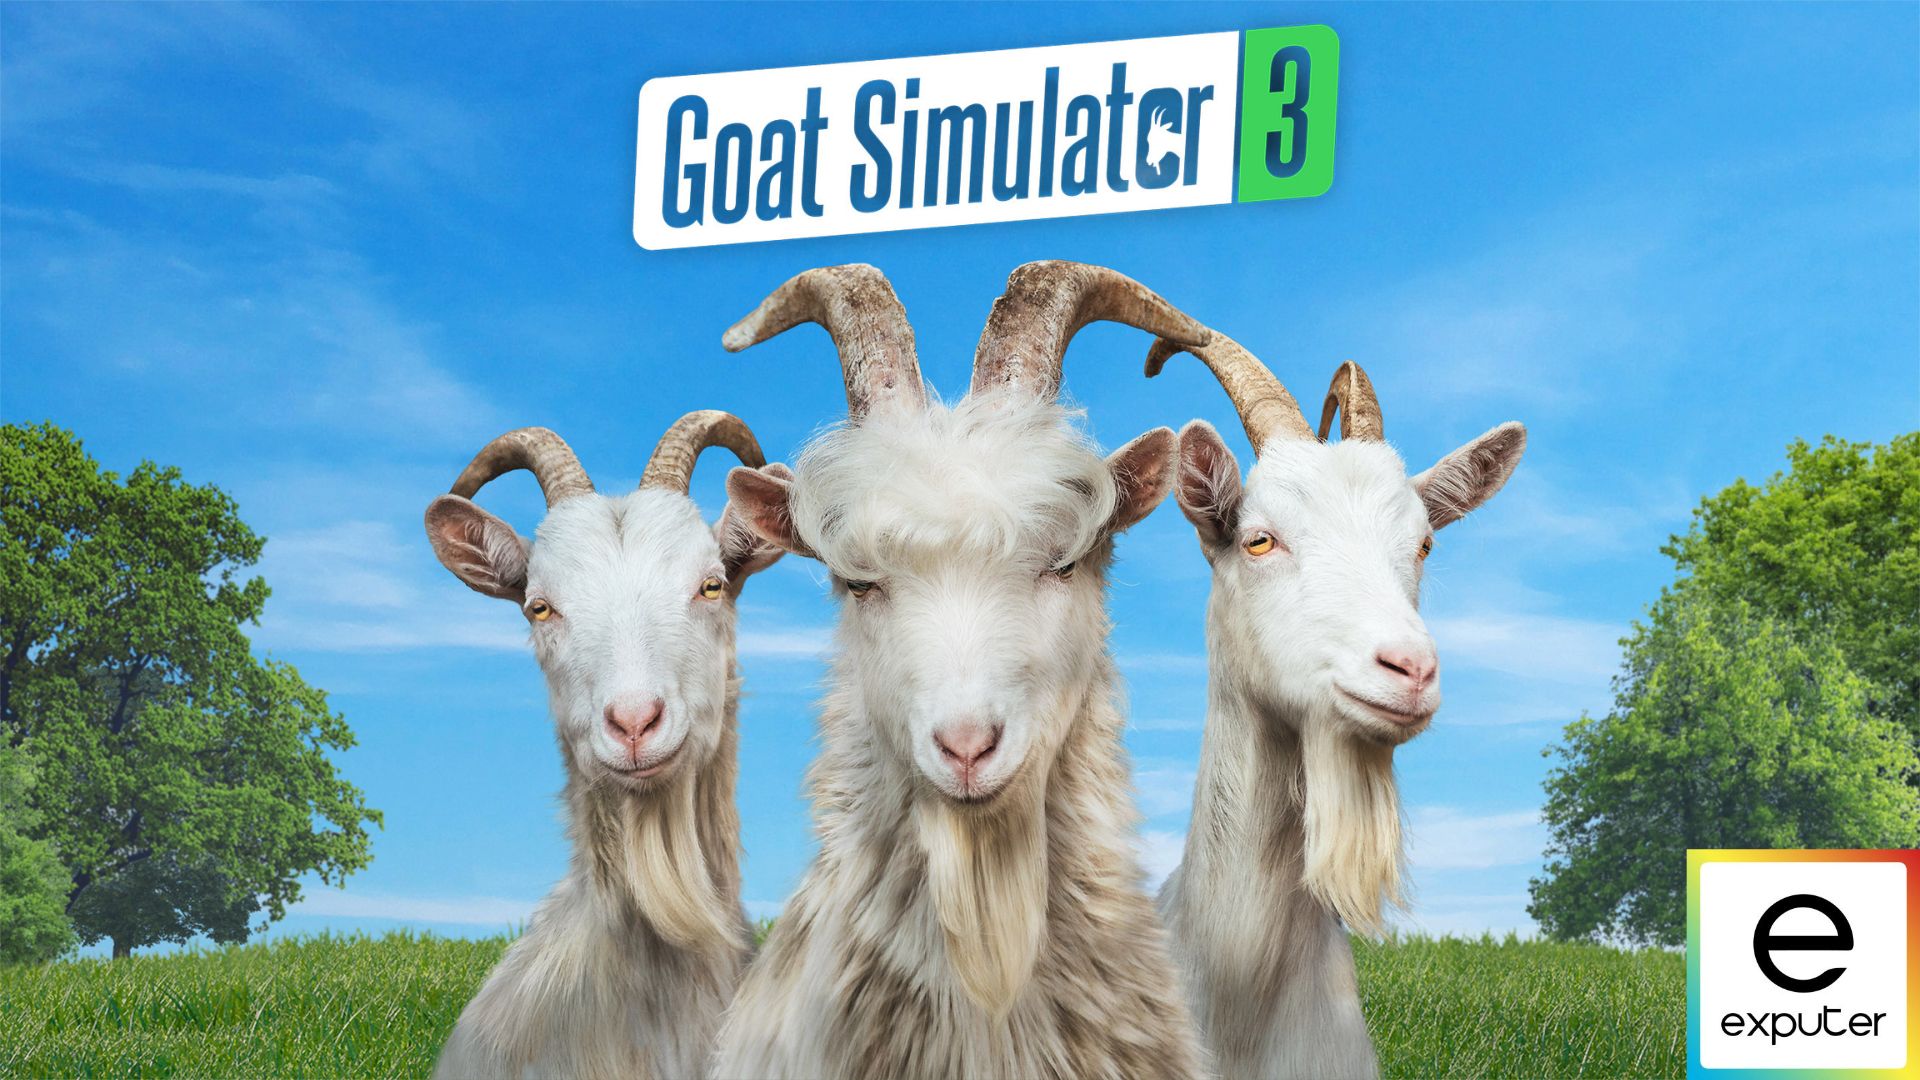 Goat Simulator 3 Review - Hilarious Multiplayer Simulation - eXputer.com